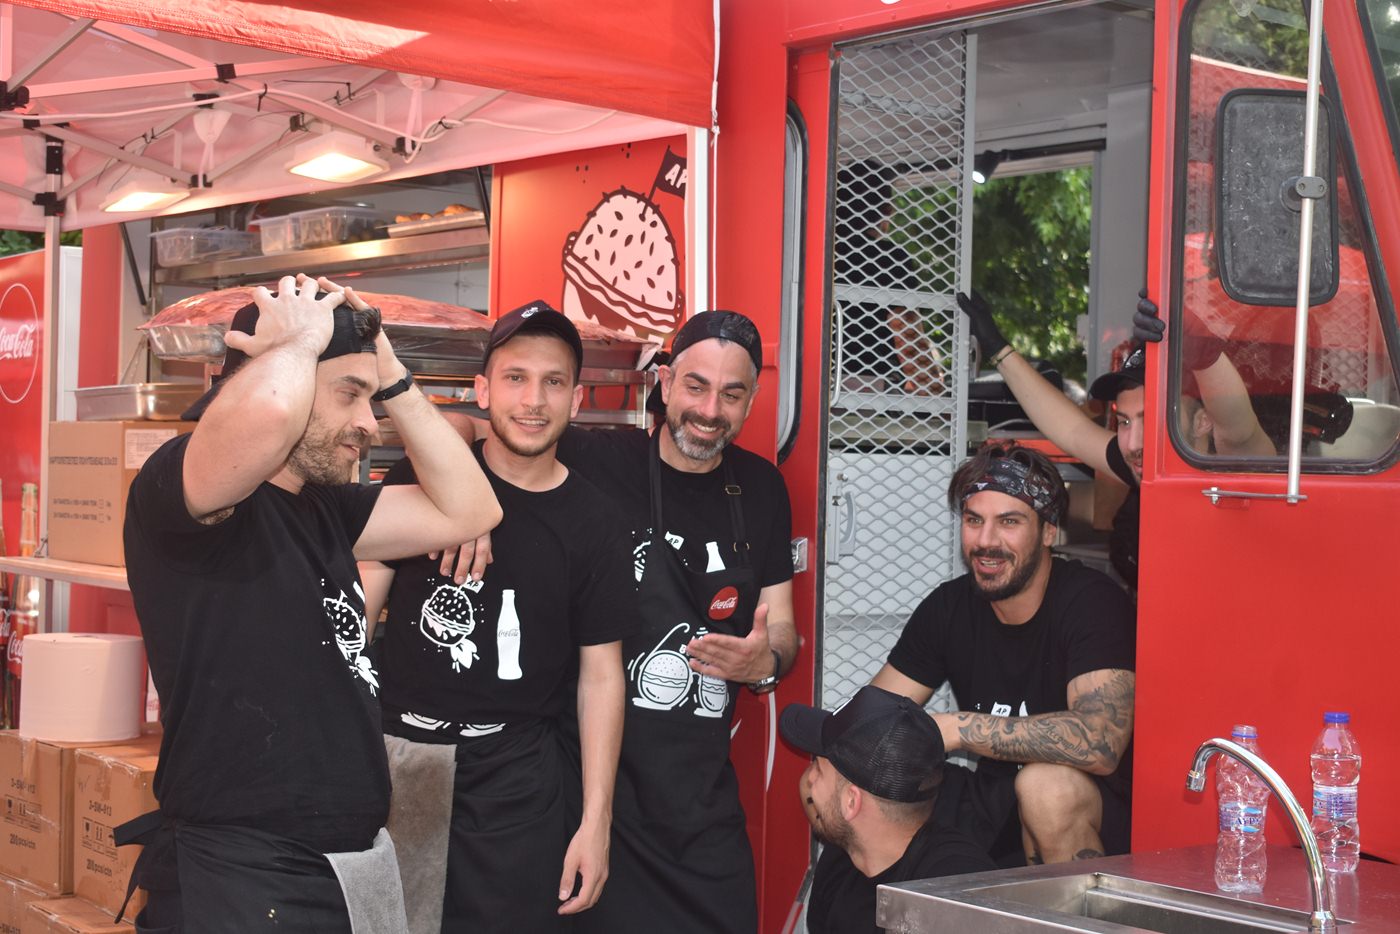 Burgers για τους Λαρισαίους έφτιαξε ο Άκης Πετρετζίκης - Το Coca-Cola & Akis Food Tour Festival έφτασε στην πόλη (φωτο)